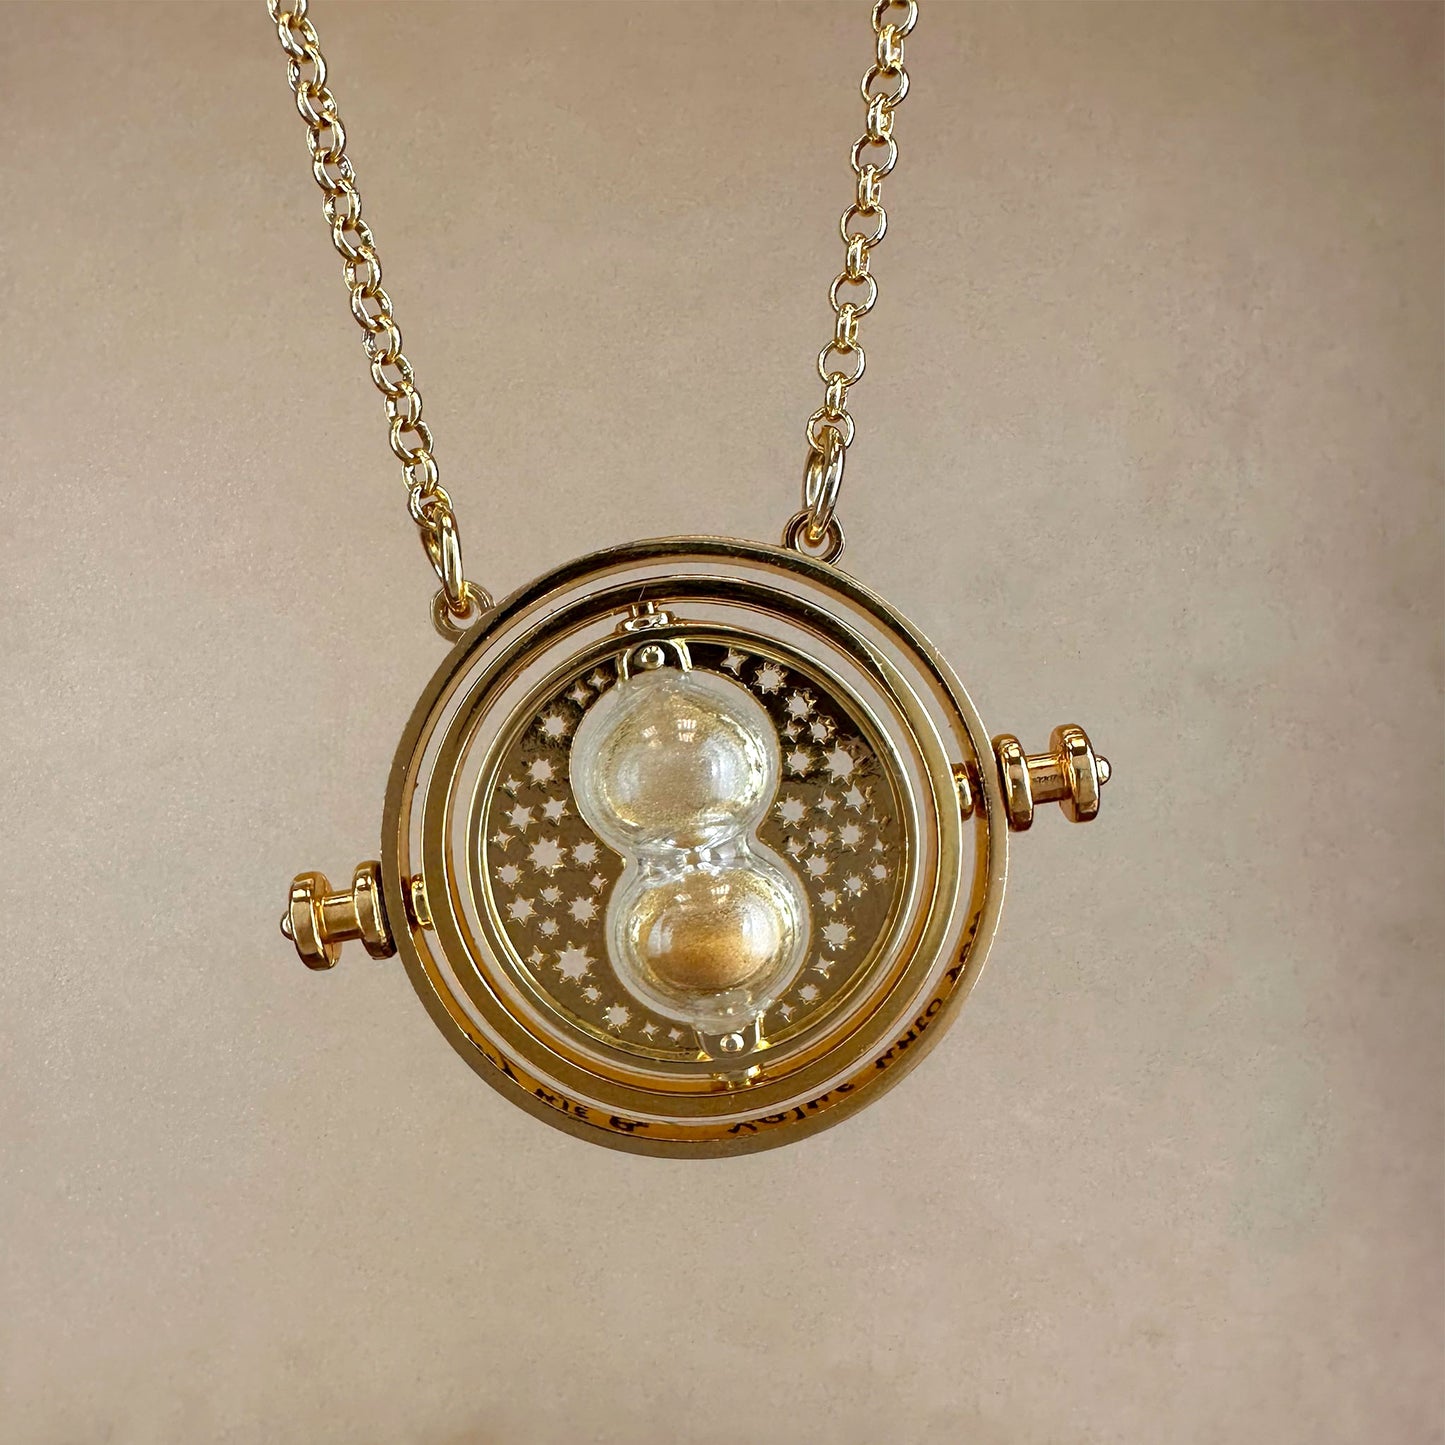 Buy Harry Potter Gold Colour Time Turner Pendant Necklace | Womens  necklaces | Argos